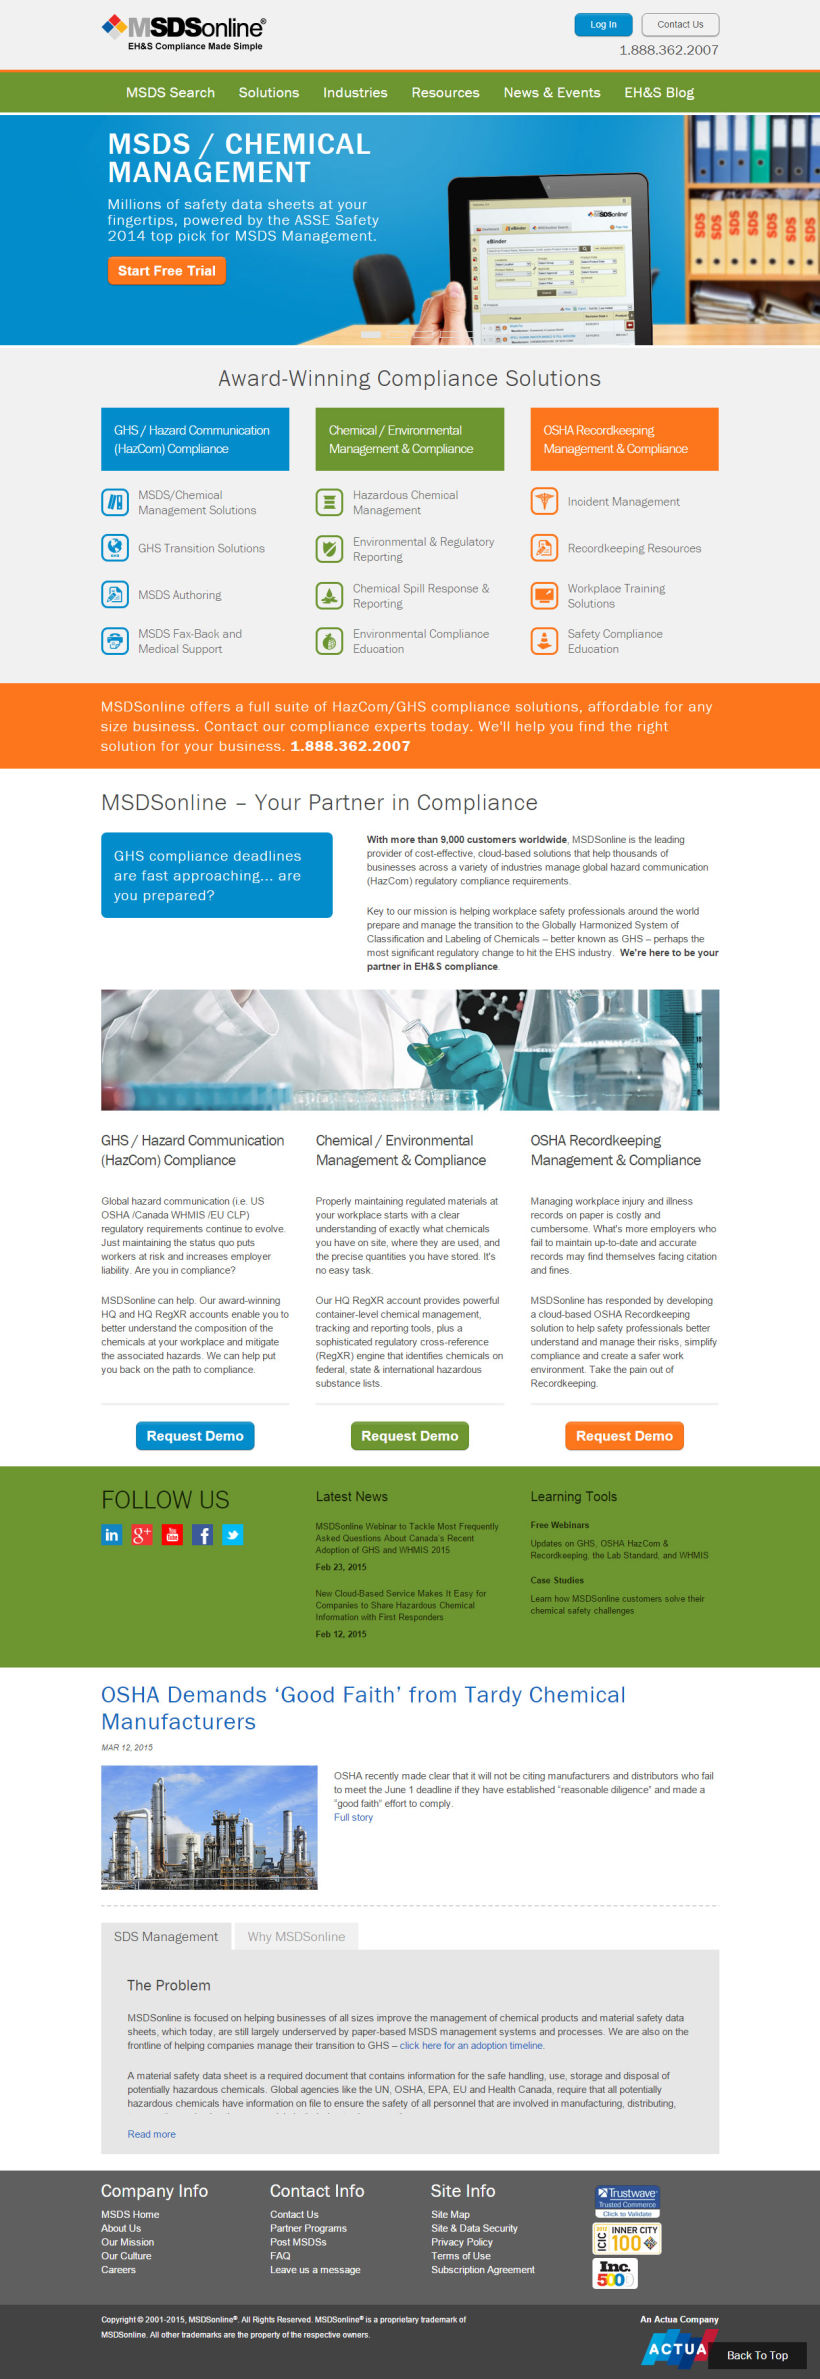 MSDSonline Corporate Website Redesign 0